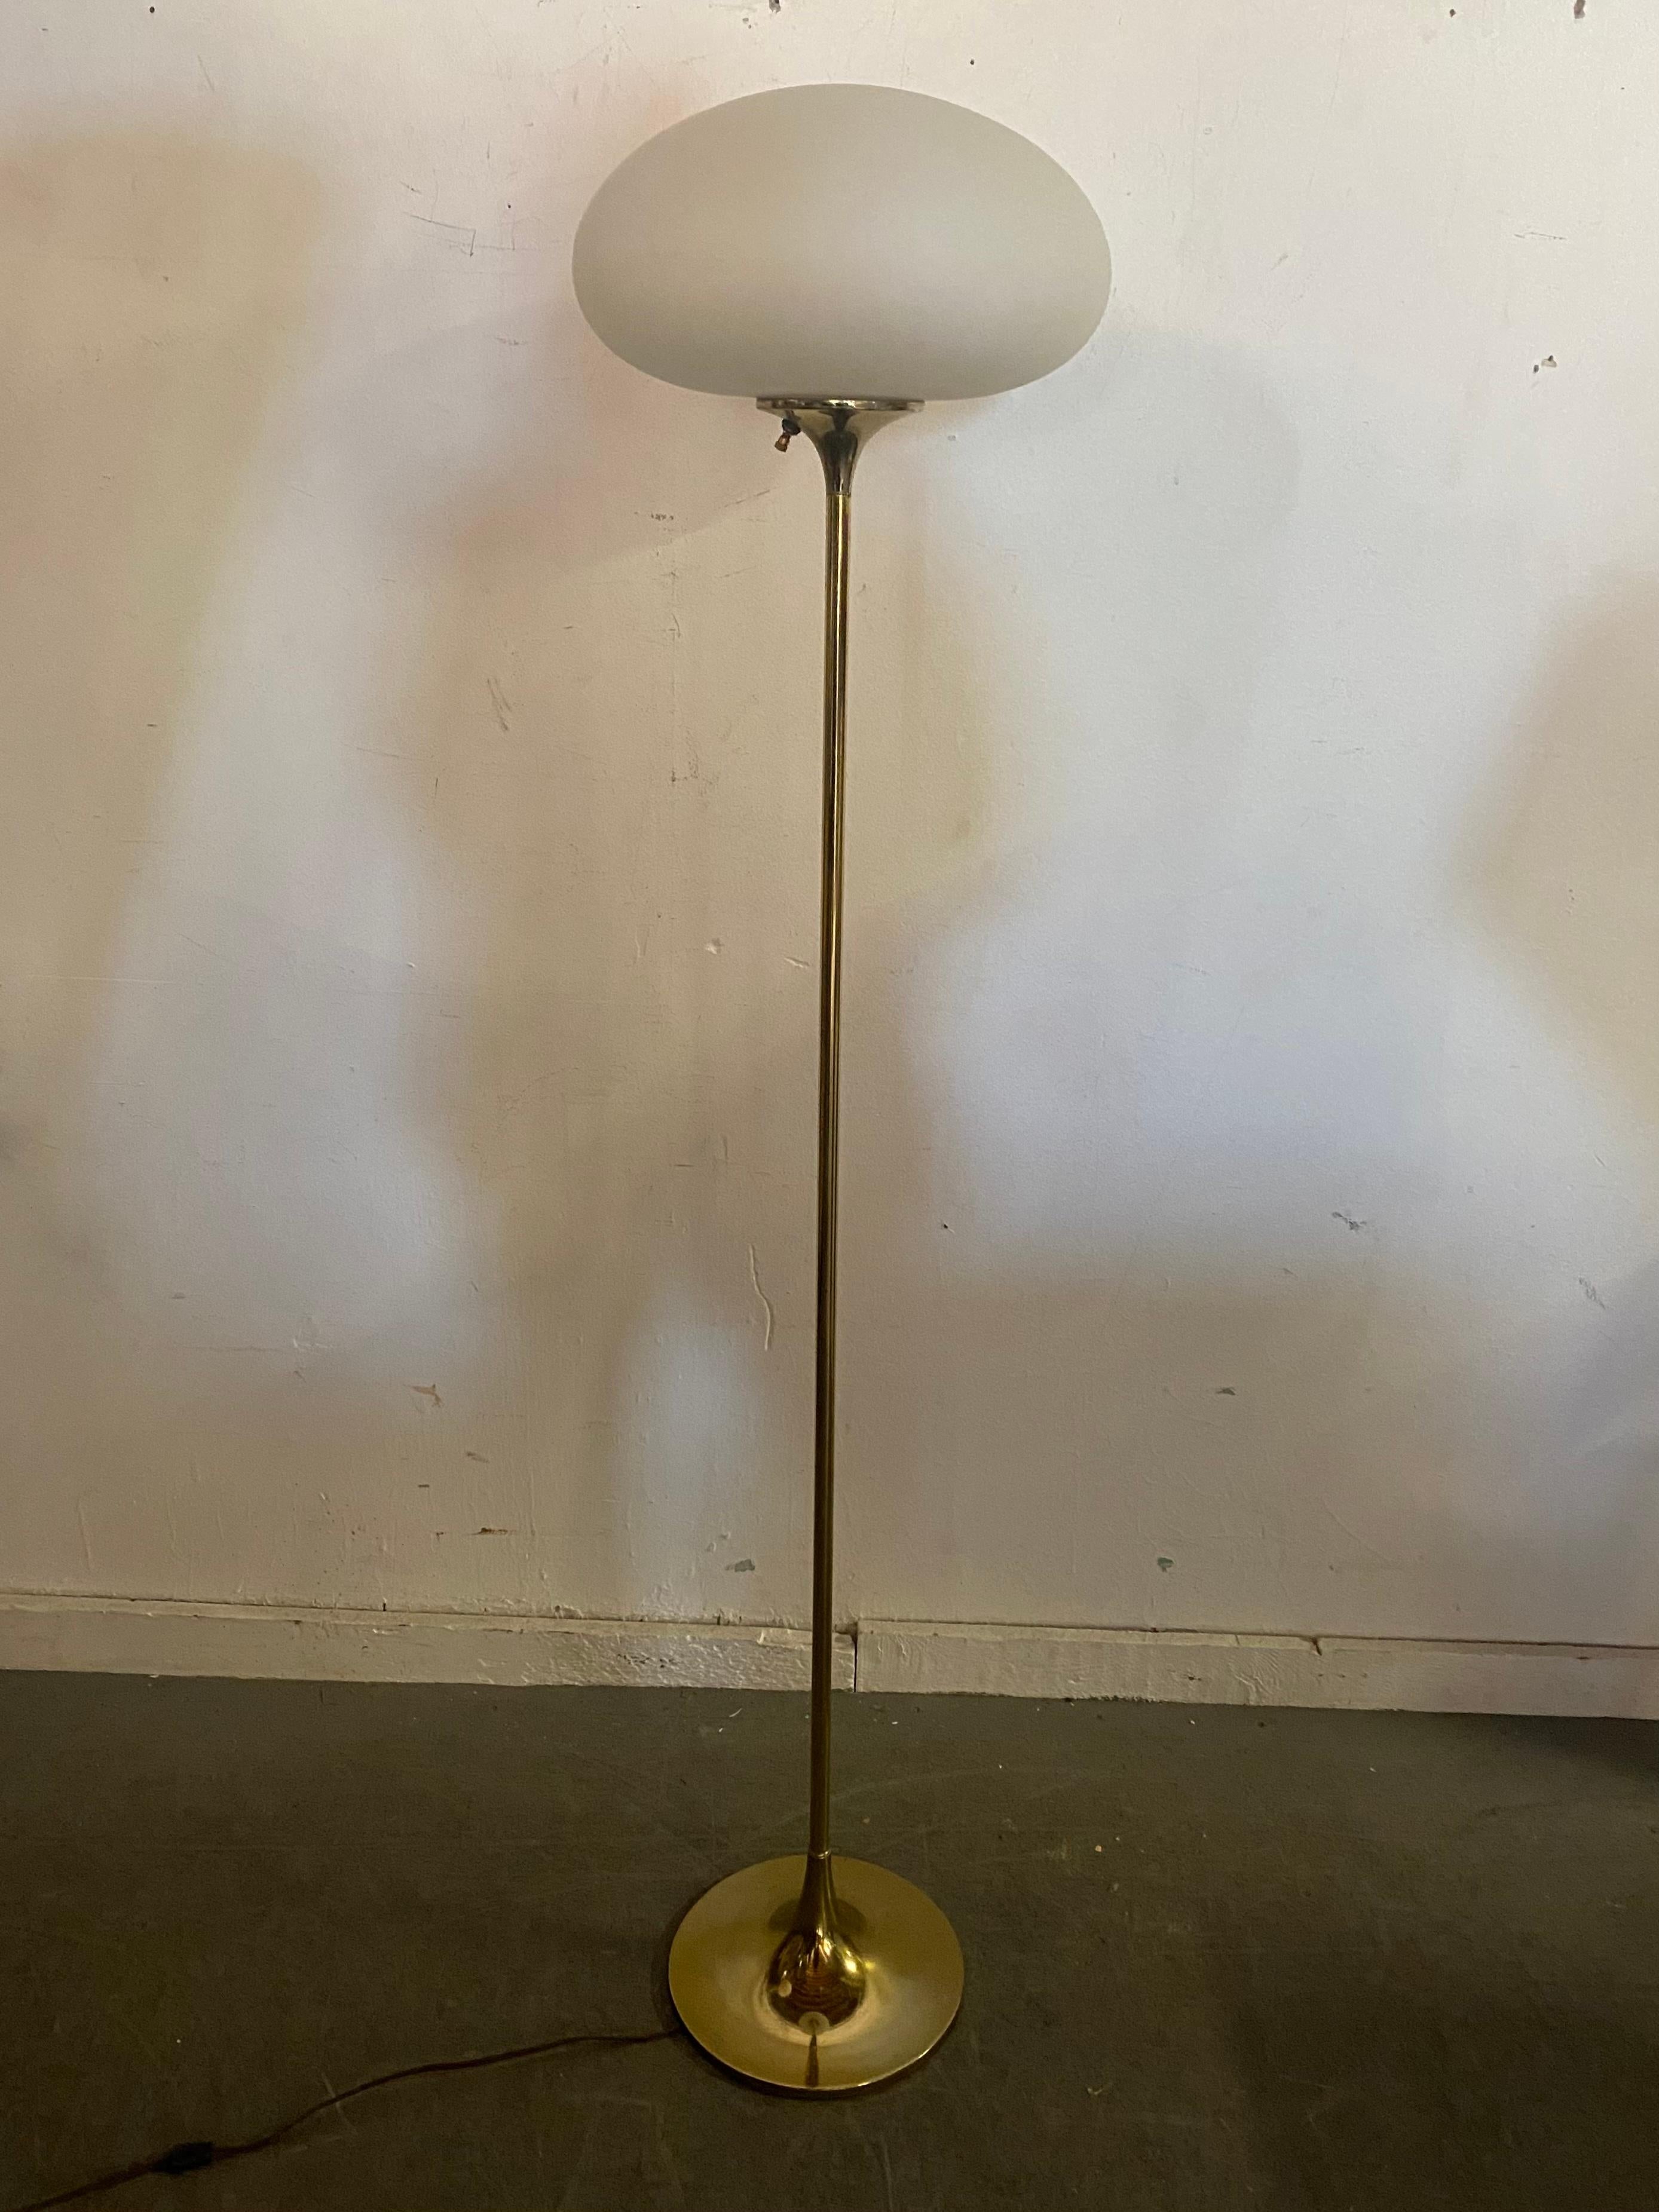 American Iconic 1960s Floor Lamp by Laurel, Gold Standard, Blown Glass Mushroom Shade